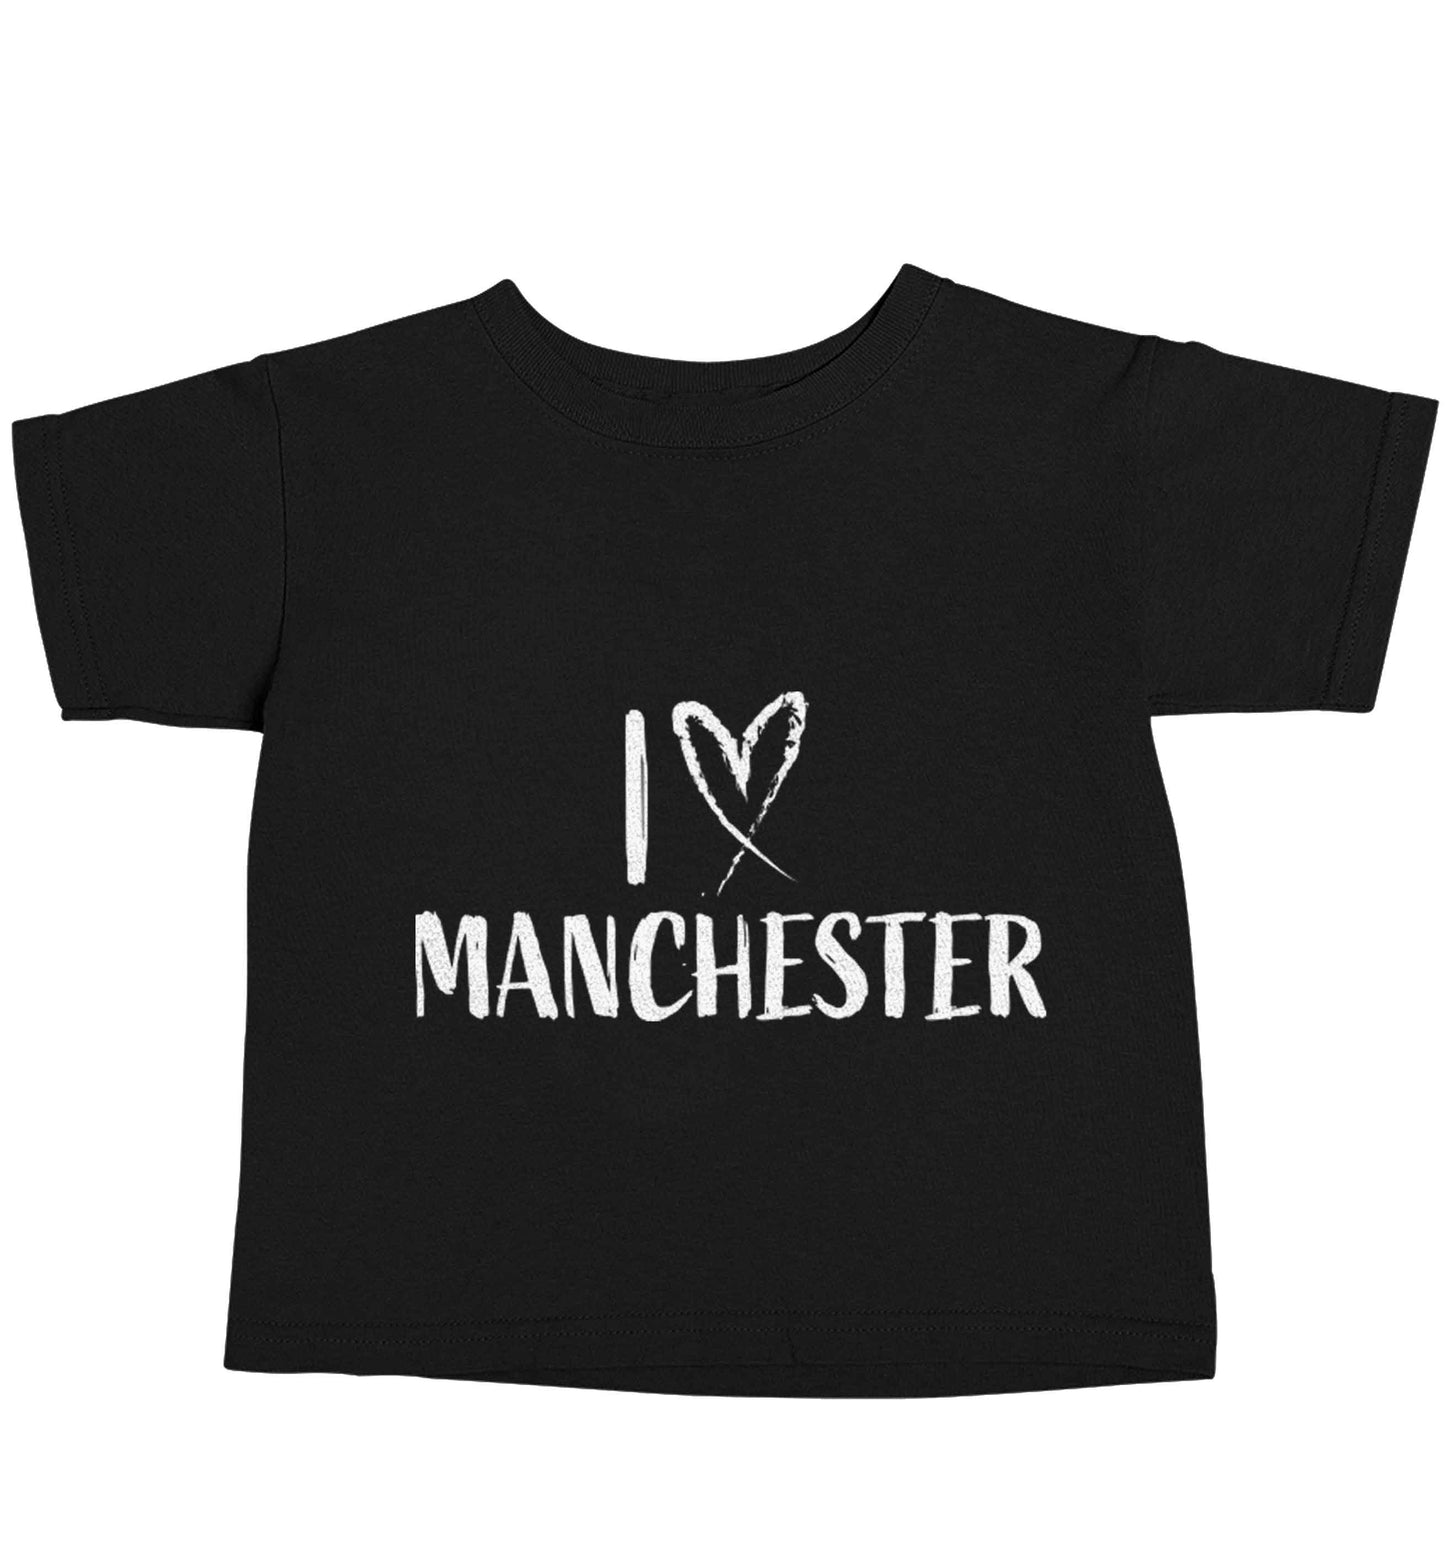 I love Manchester Black baby toddler Tshirt 2 years